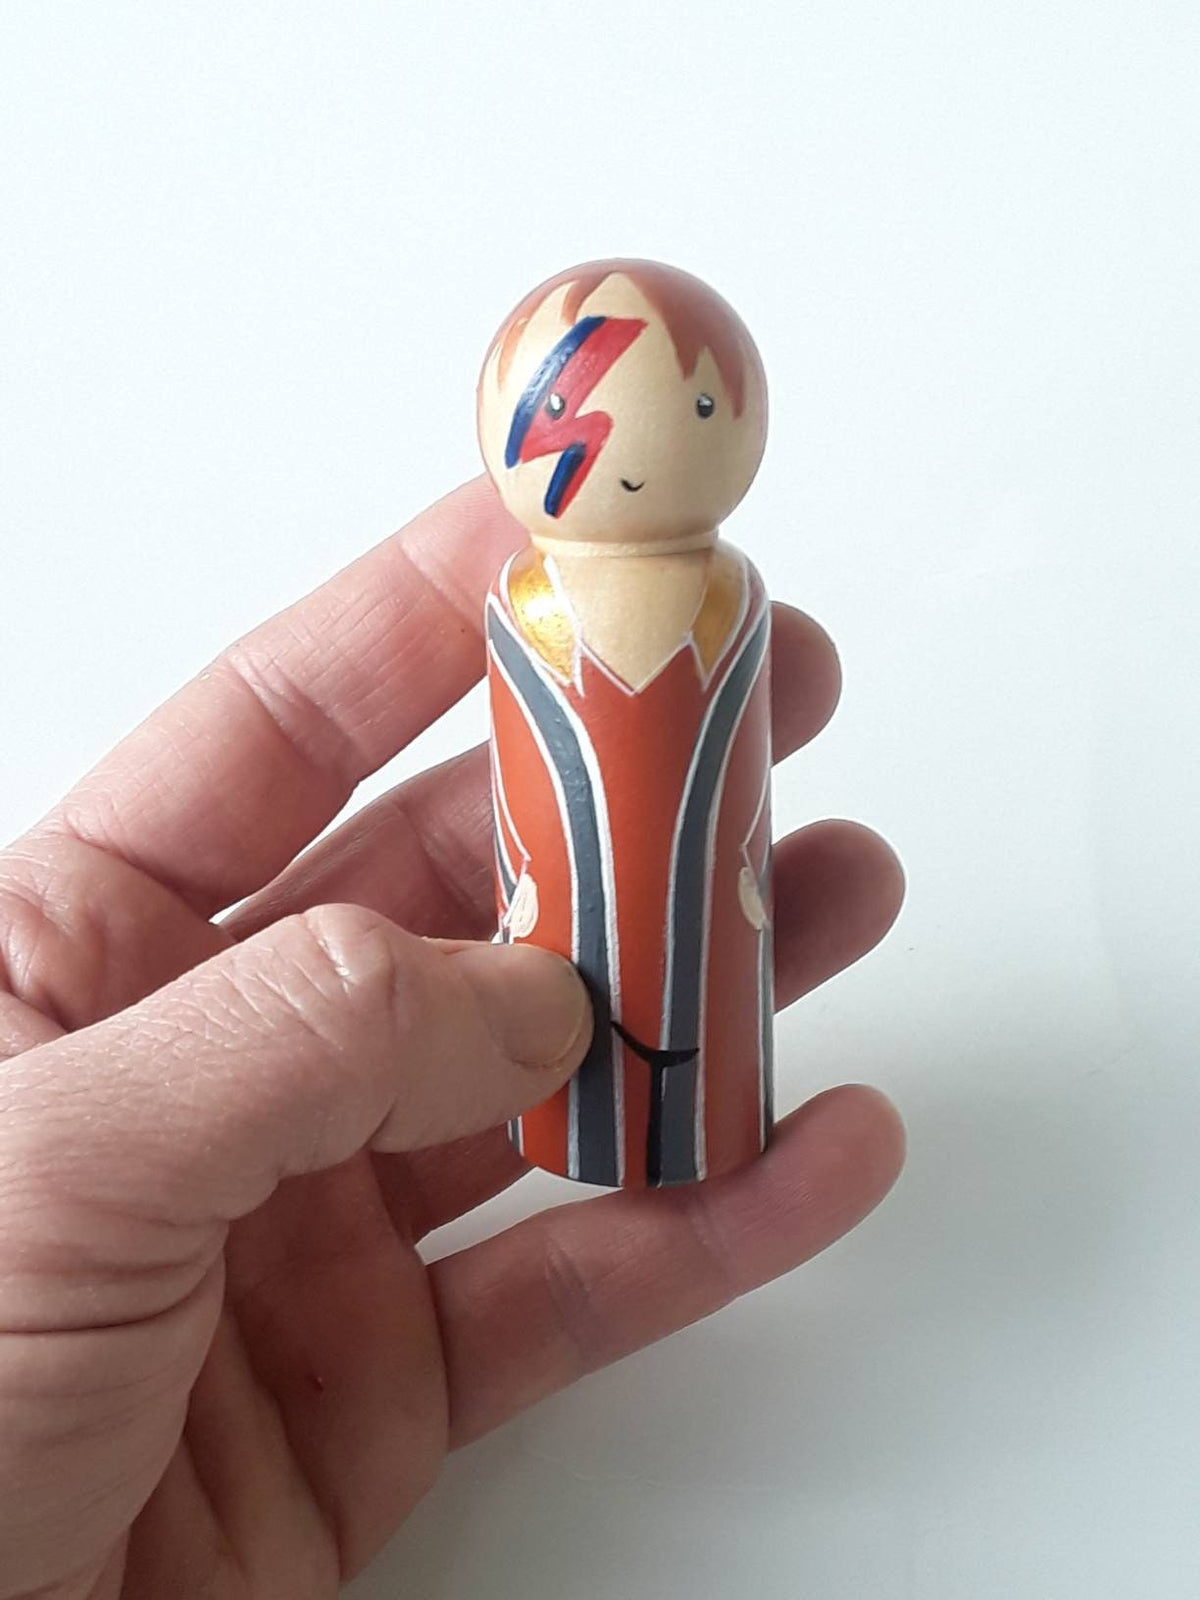 David Bowie peg doll, David Bowie gifts, David Bowie memorabilia, gift Ziggy Stardust art, Cake Topper, David Bowie art, David Bowie party